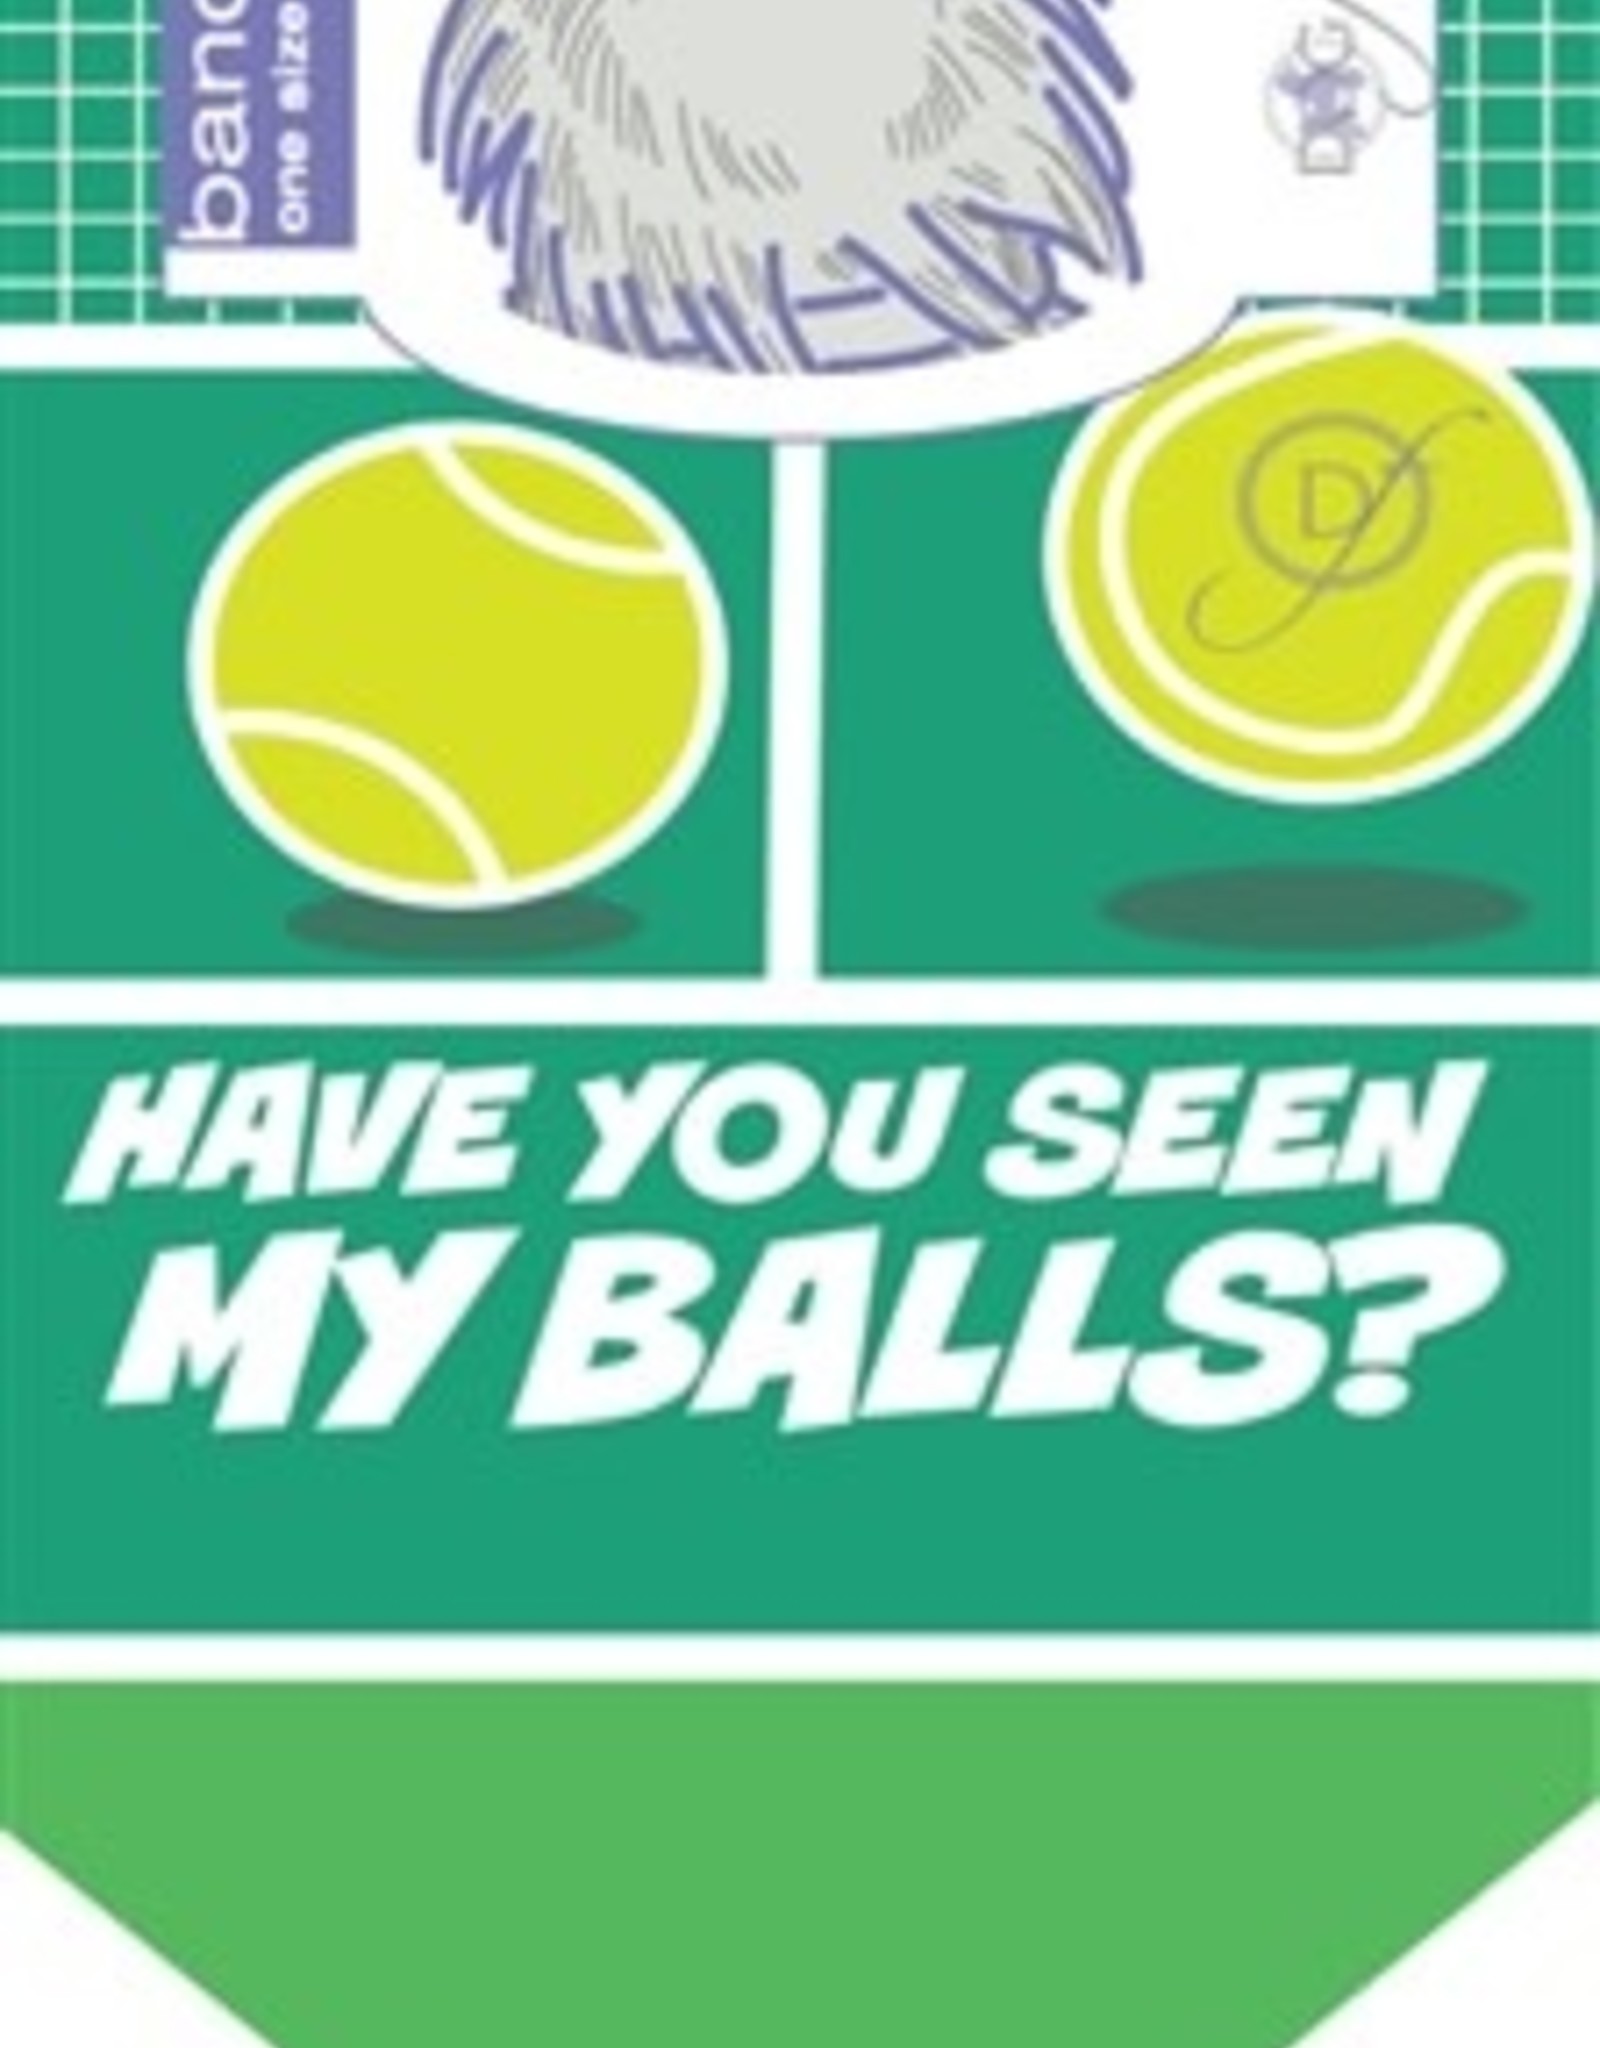 Dog Bandana - Have You Seen My Balls?